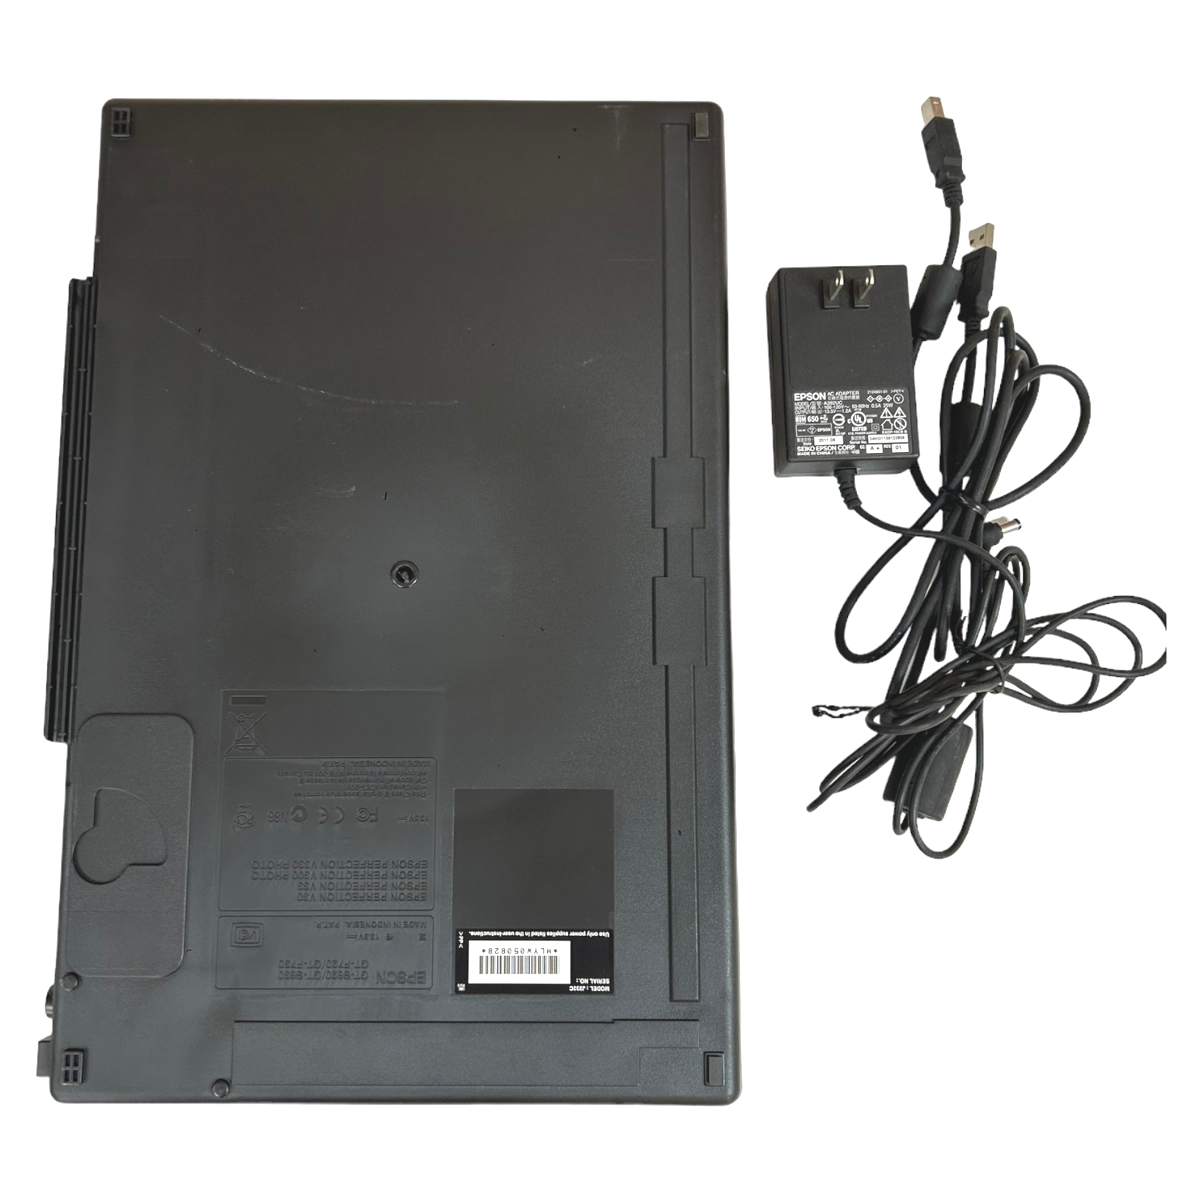 GT-S630 Epson scanner CD attaching 